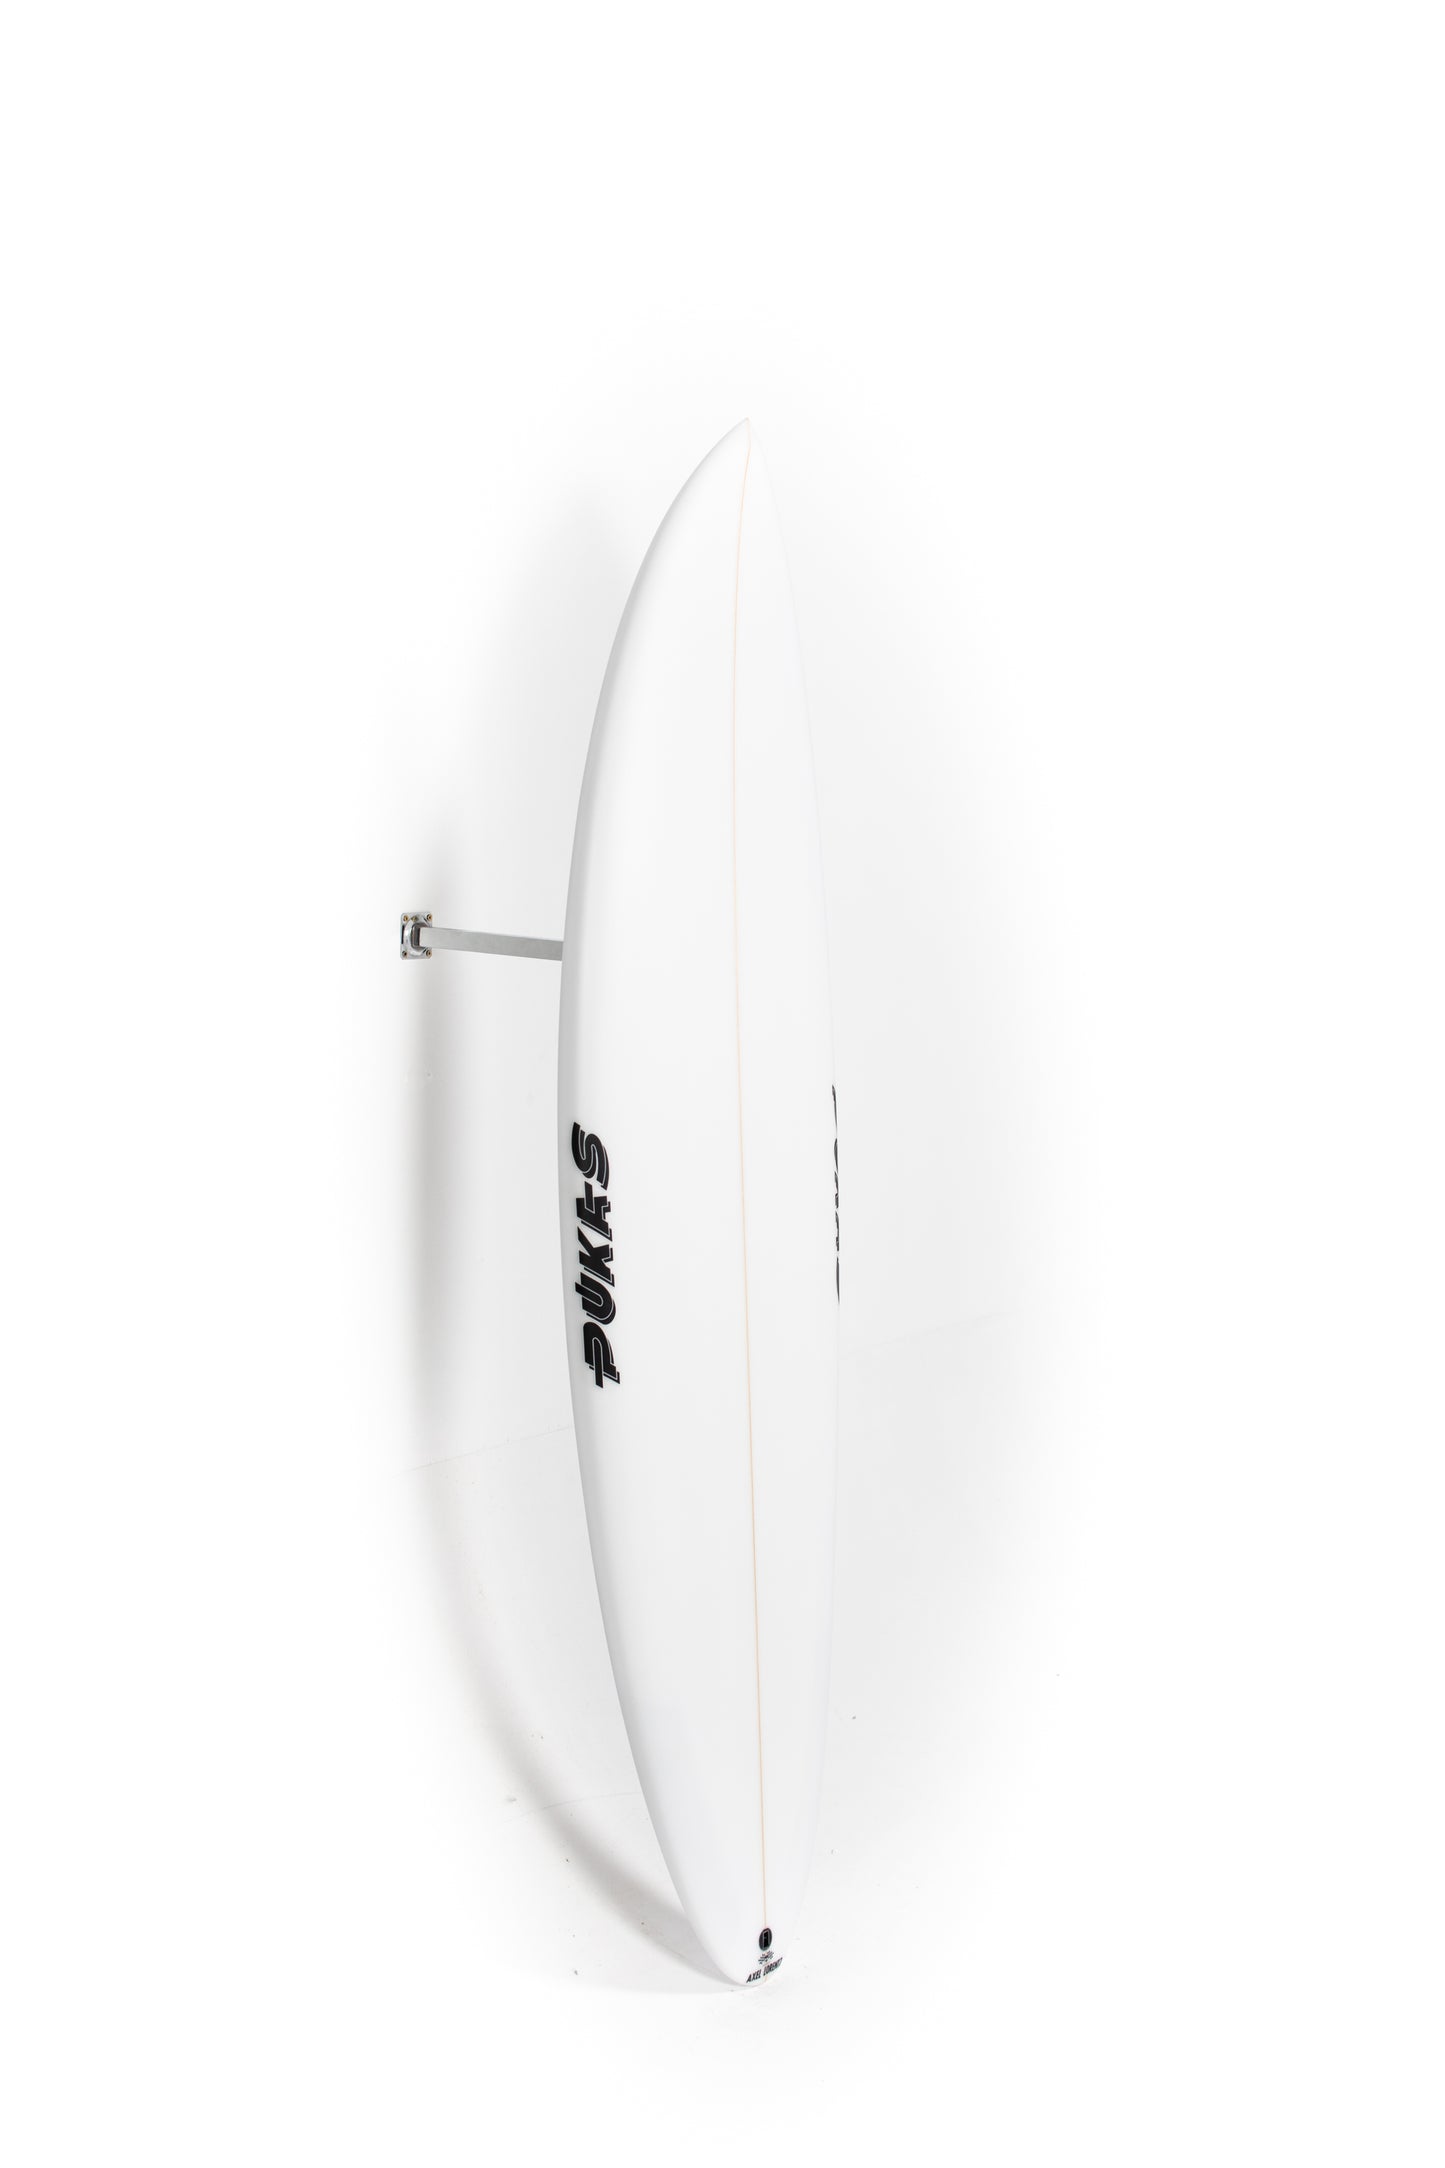 Pukas Surfboard - ORIGINAL 69 by Axel Lorentz - 6'2” x 21,25 x 2 